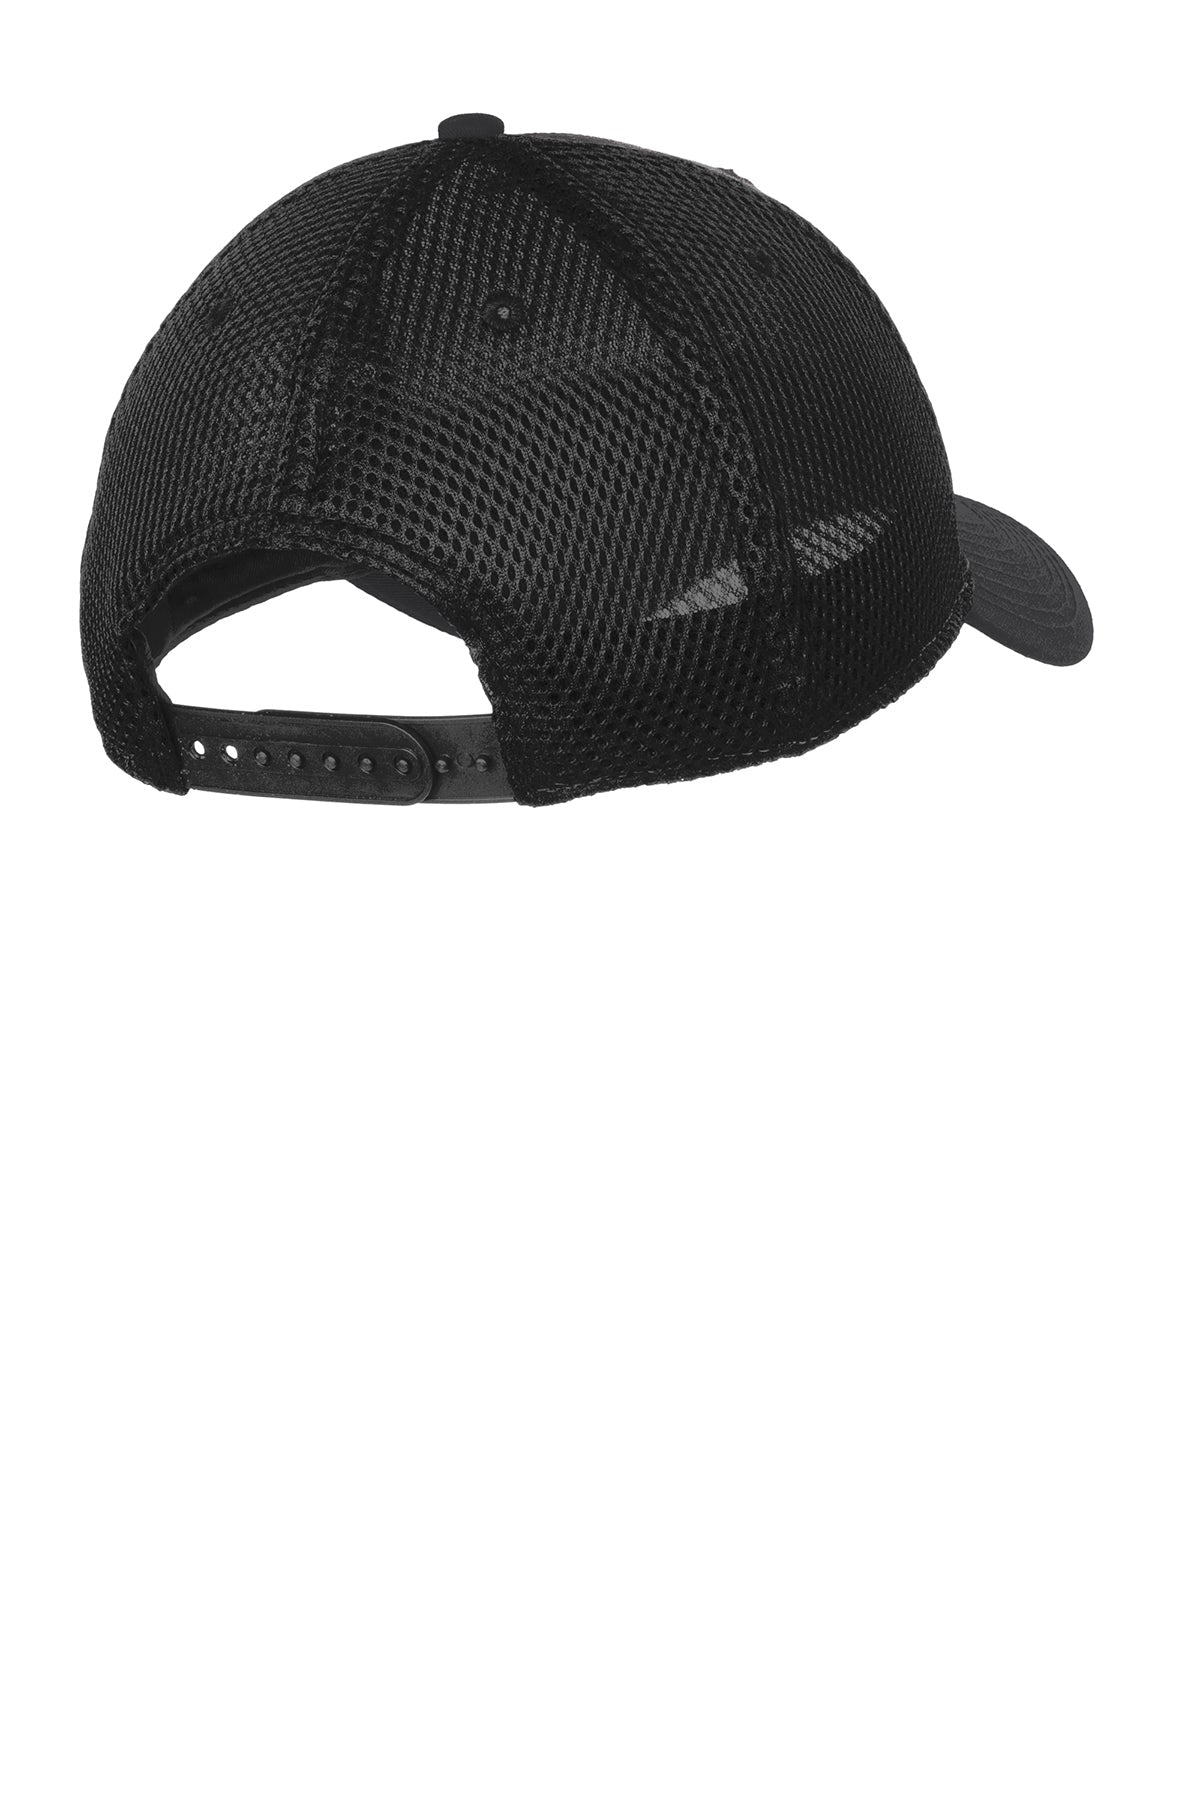 New Era Snapback Contrast Front Mesh Customized Caps, Charcoal/Black